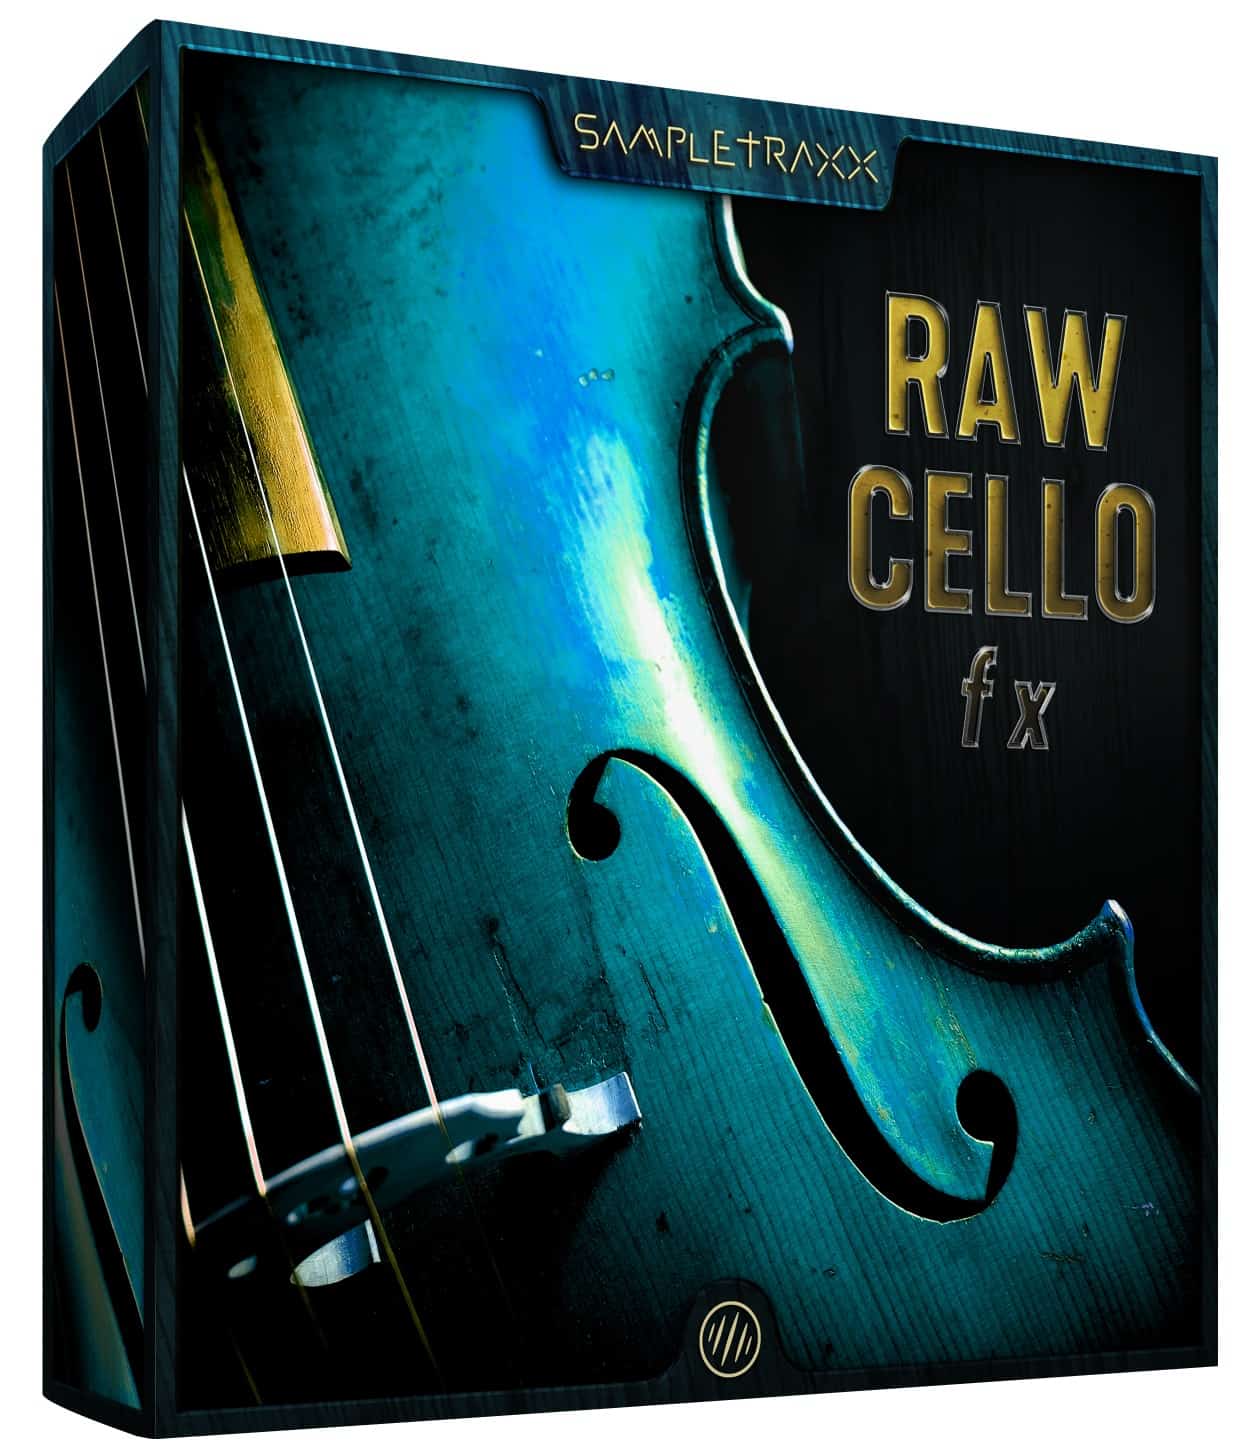 SampleTraxx Releases RAW CELLO FX - Organic Cello Sound Effects